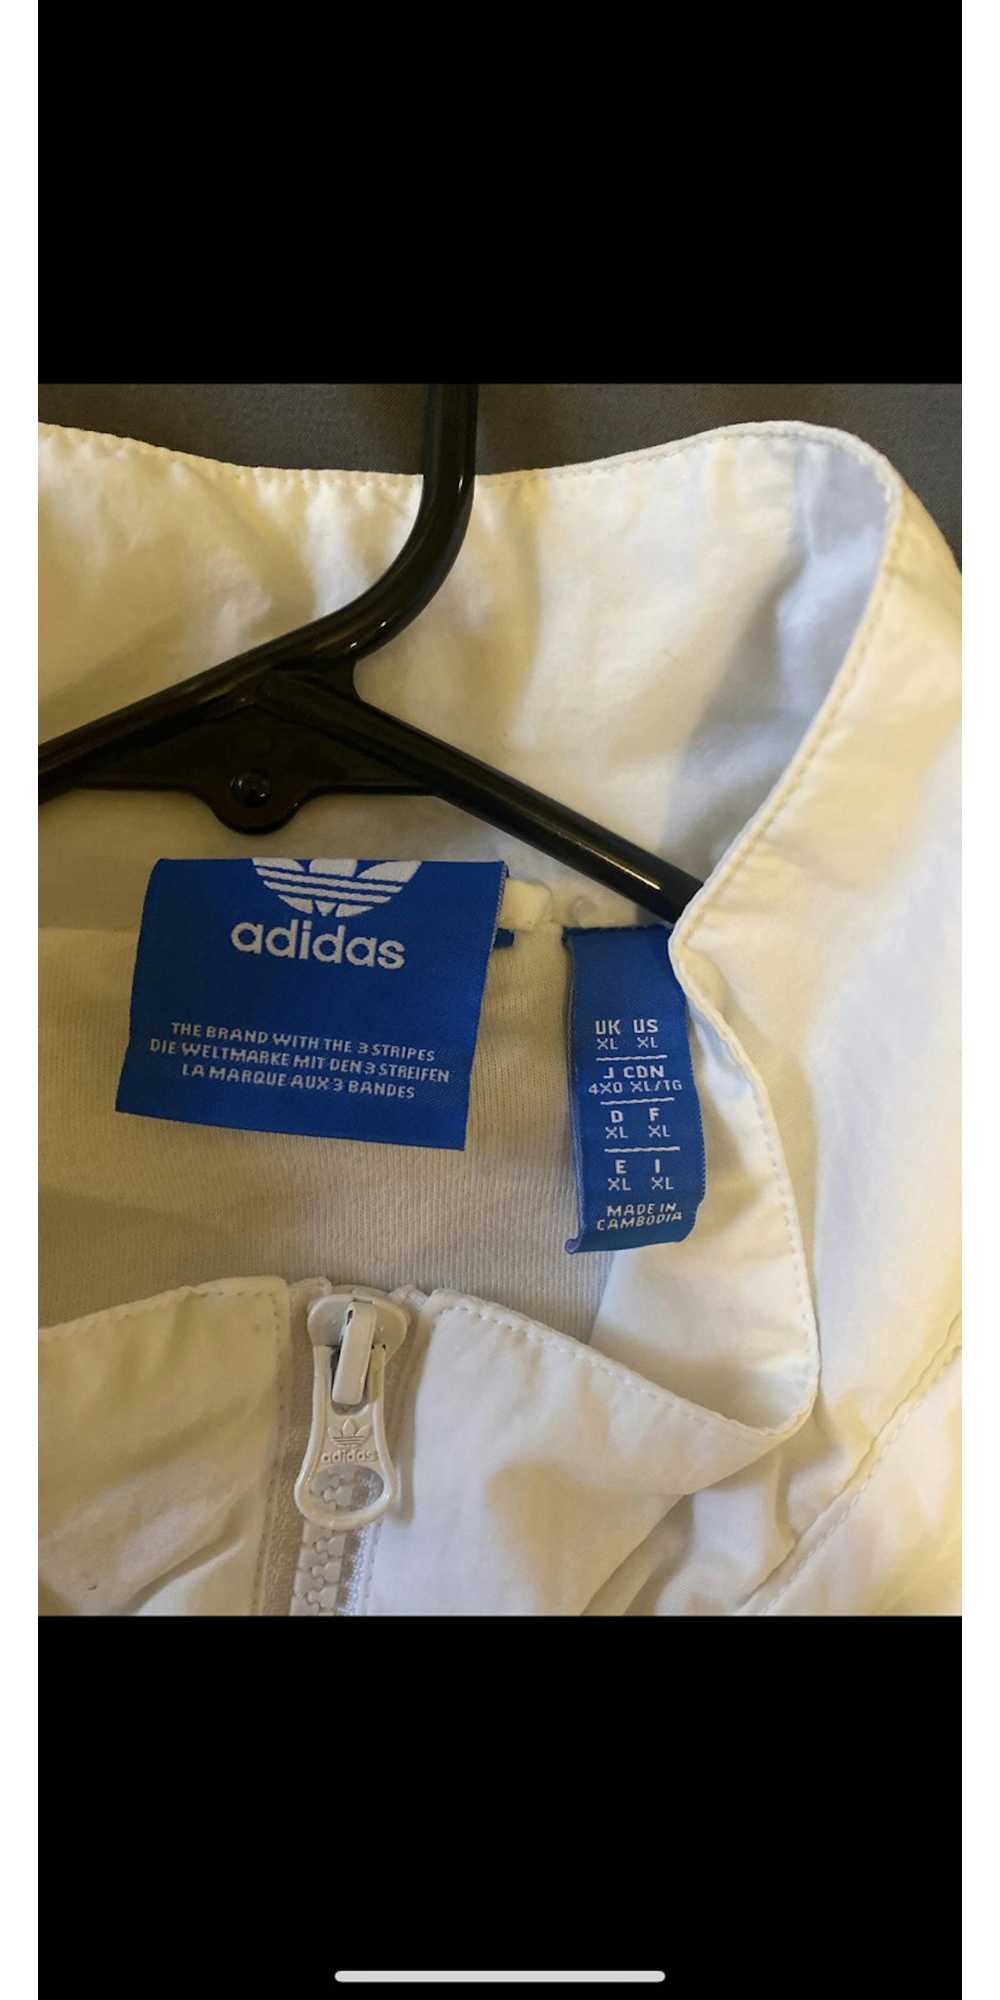 Adidas adidas Zip Up - Limited - image 2